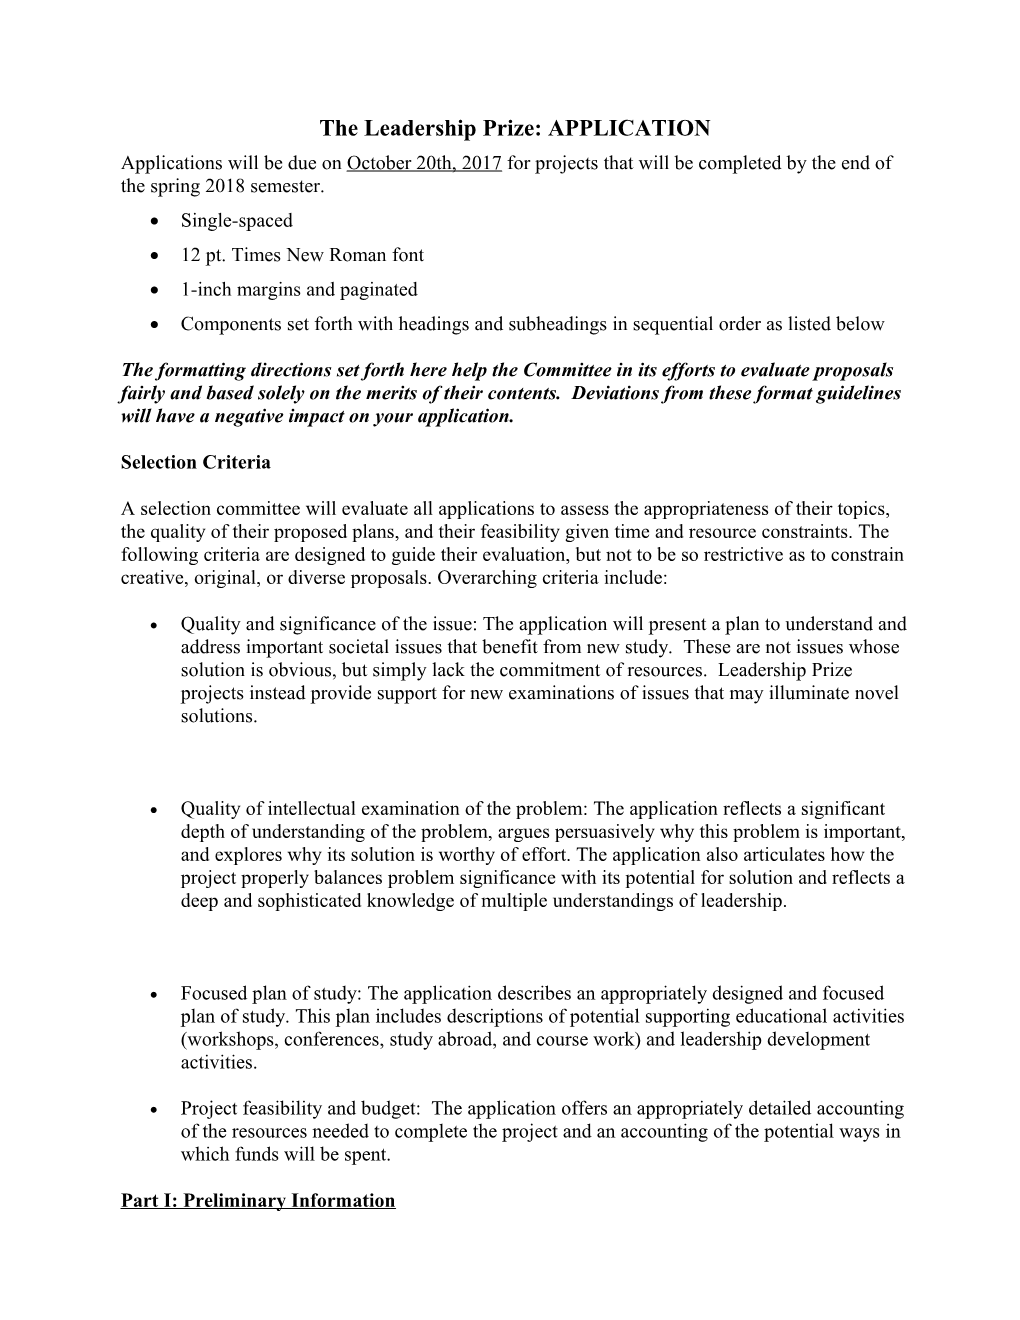 The 2006 Perito Award Application Form